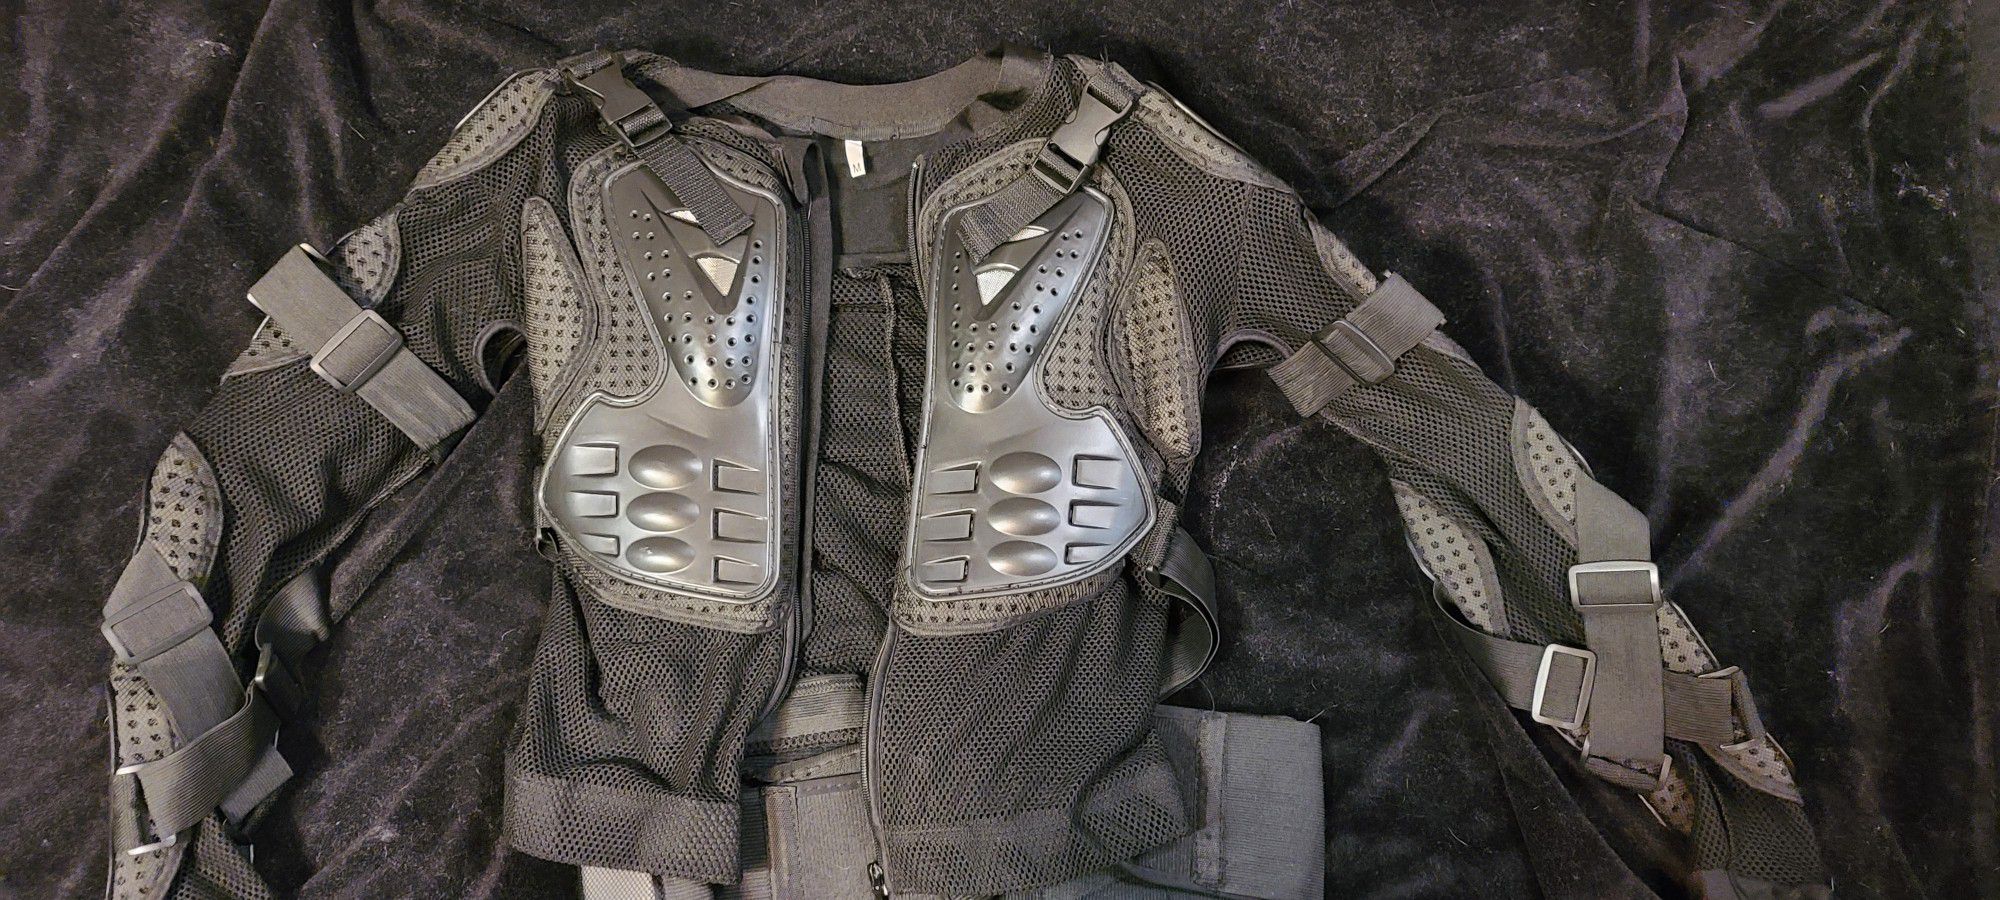 Motorcycle armor jacket